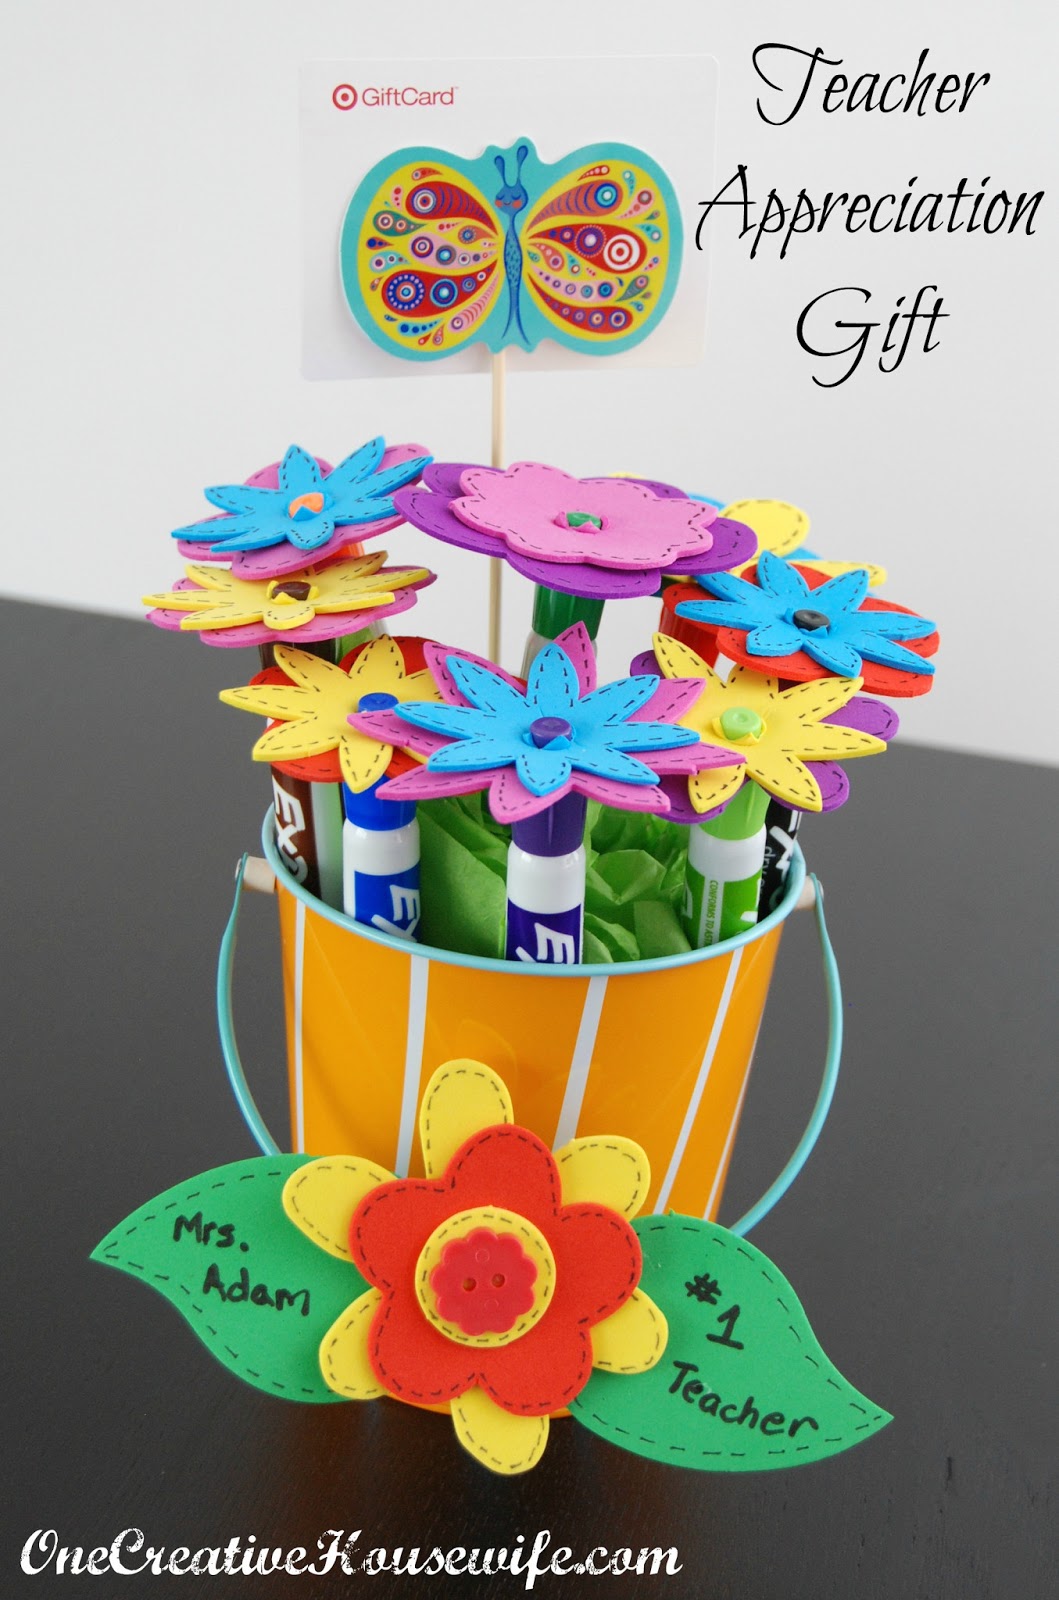 One Creative Housewife: Dry Erase Marker Bouquet {Teacher Appreciation Gift}